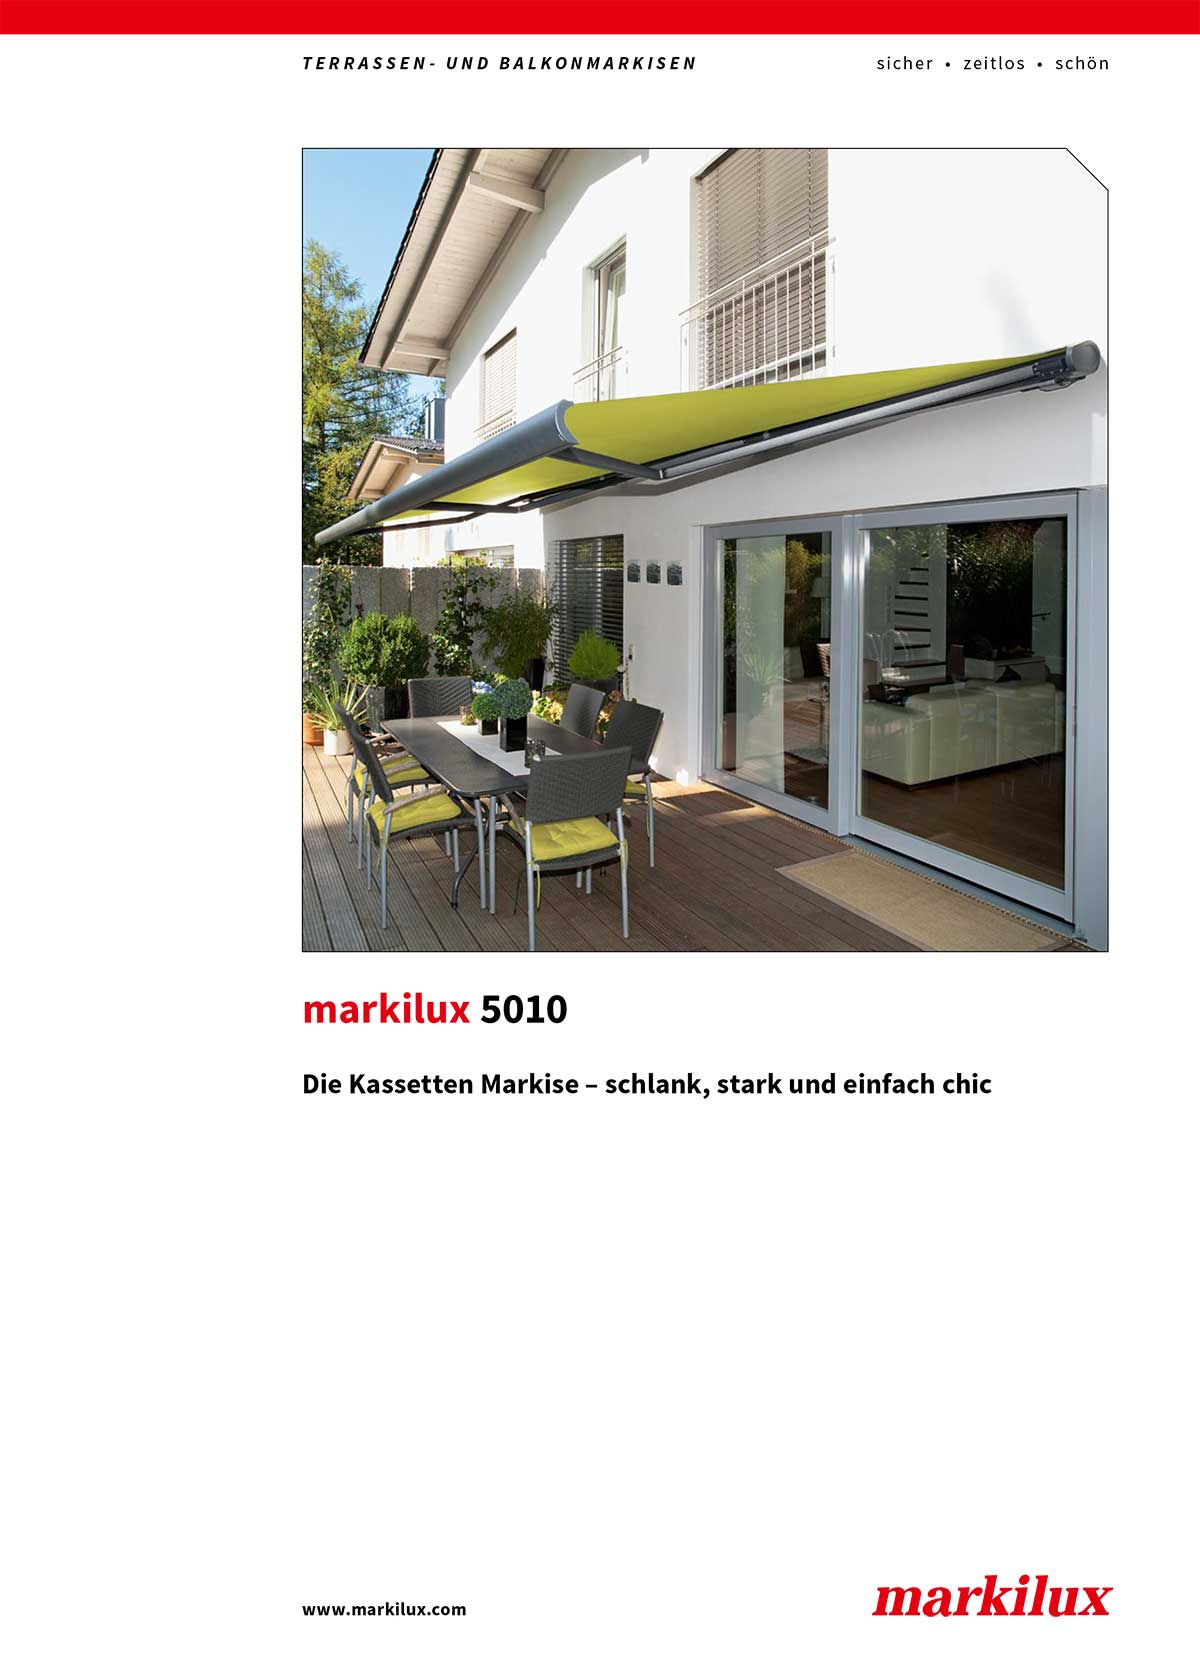 Markilux Markisen 5050